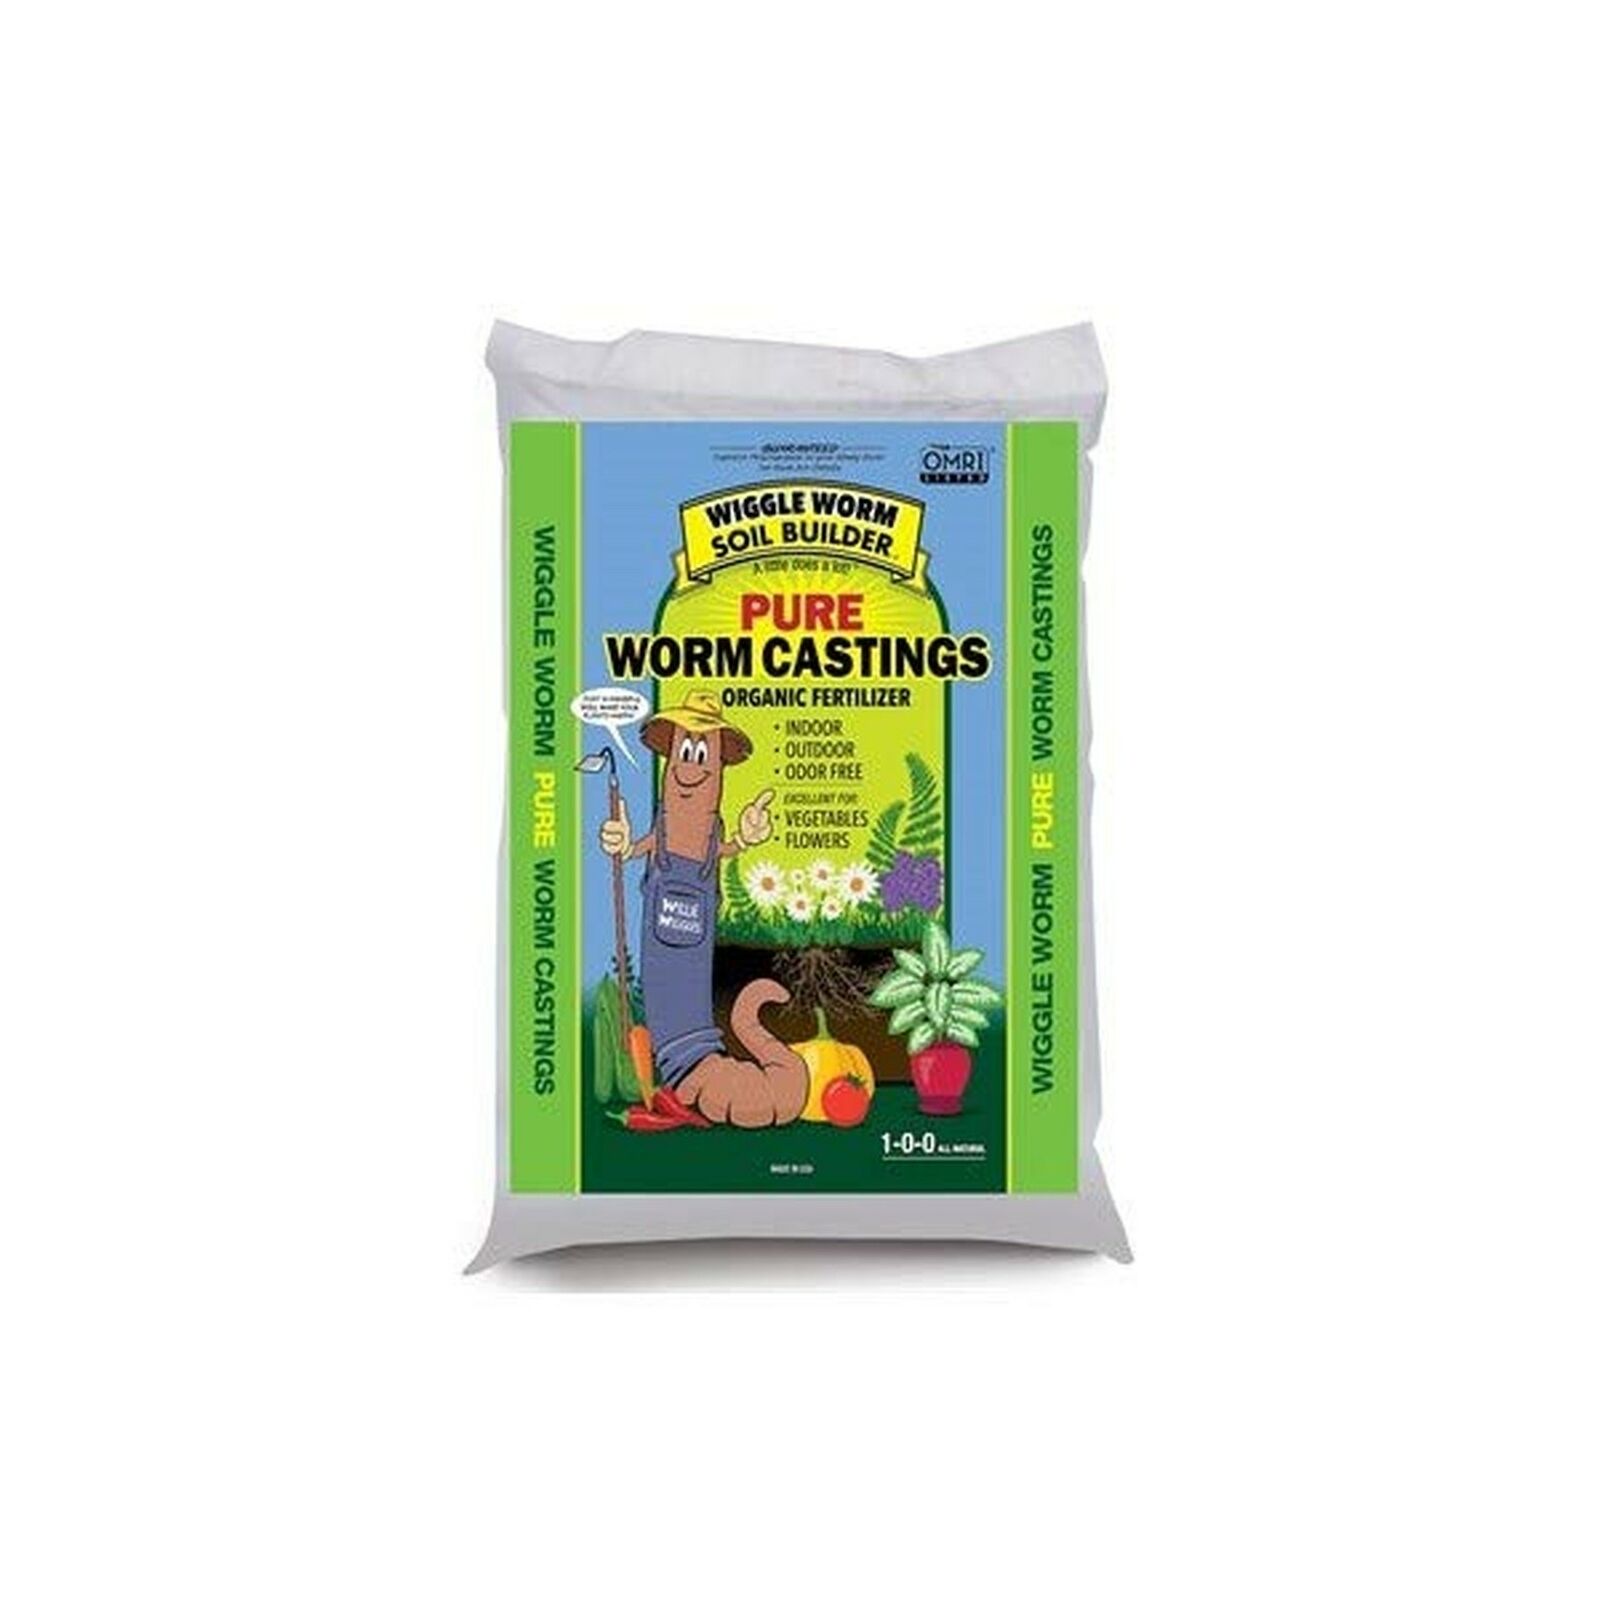 Worm Castings Organic Fertilizer Soil 4.5- Wiggle Builder Max 59% OFF Cheap